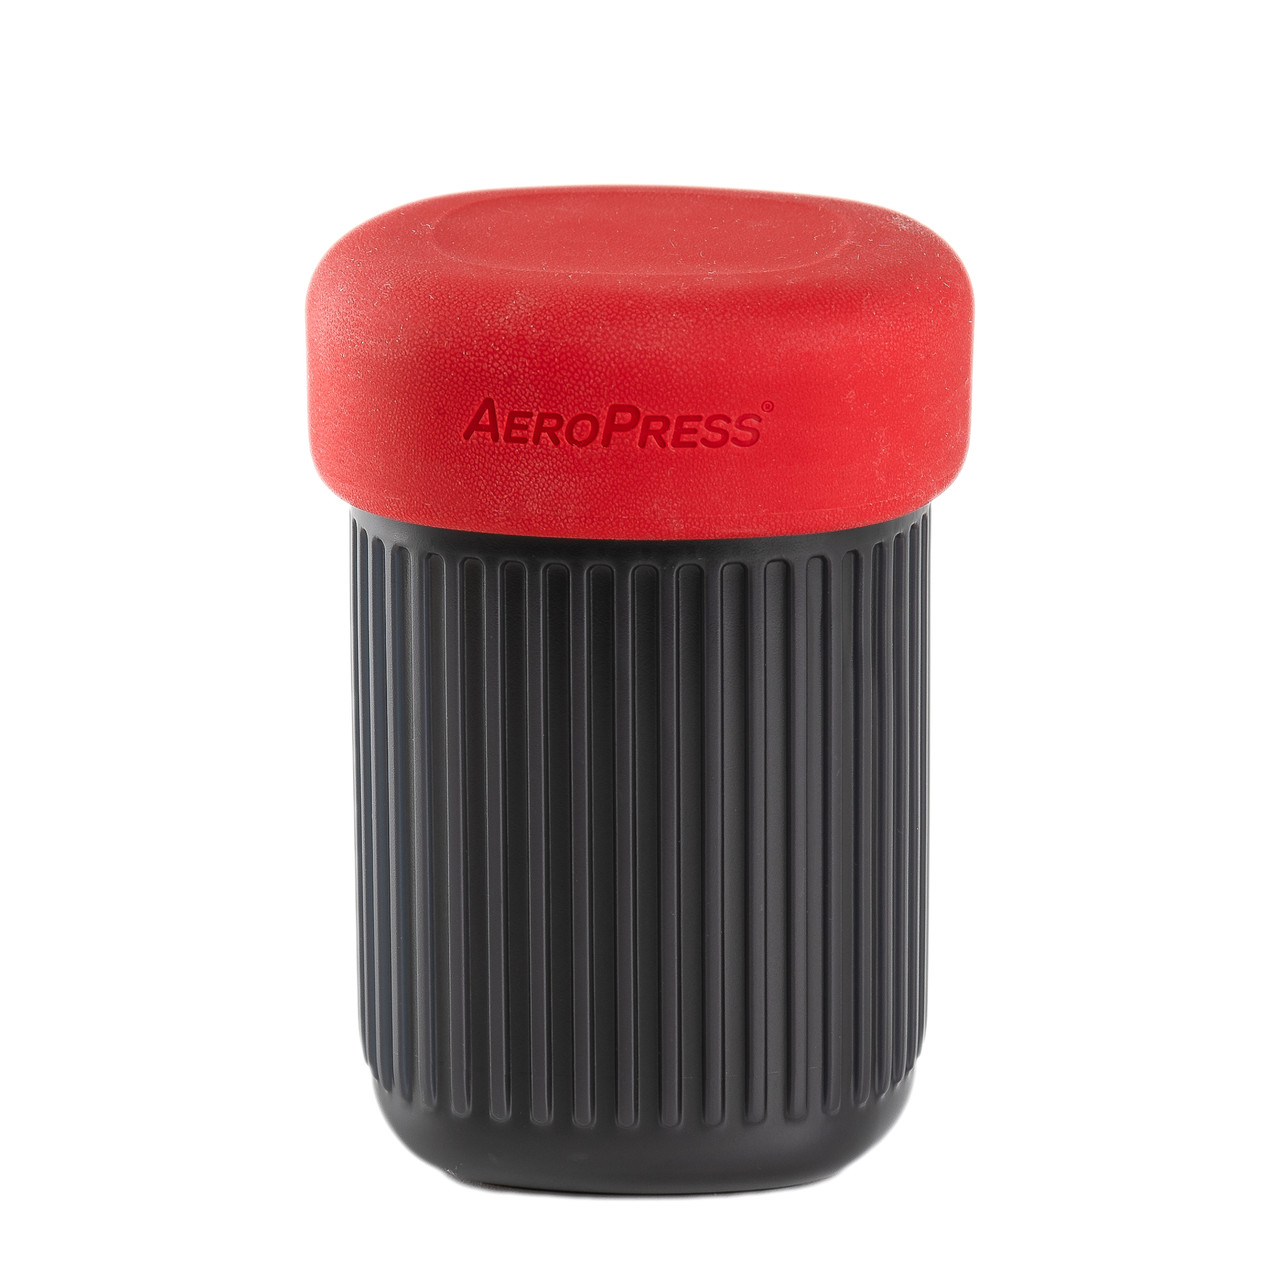 Aeropress Go Portable Travel Coffee Press Kit, 1-3 Cups in a